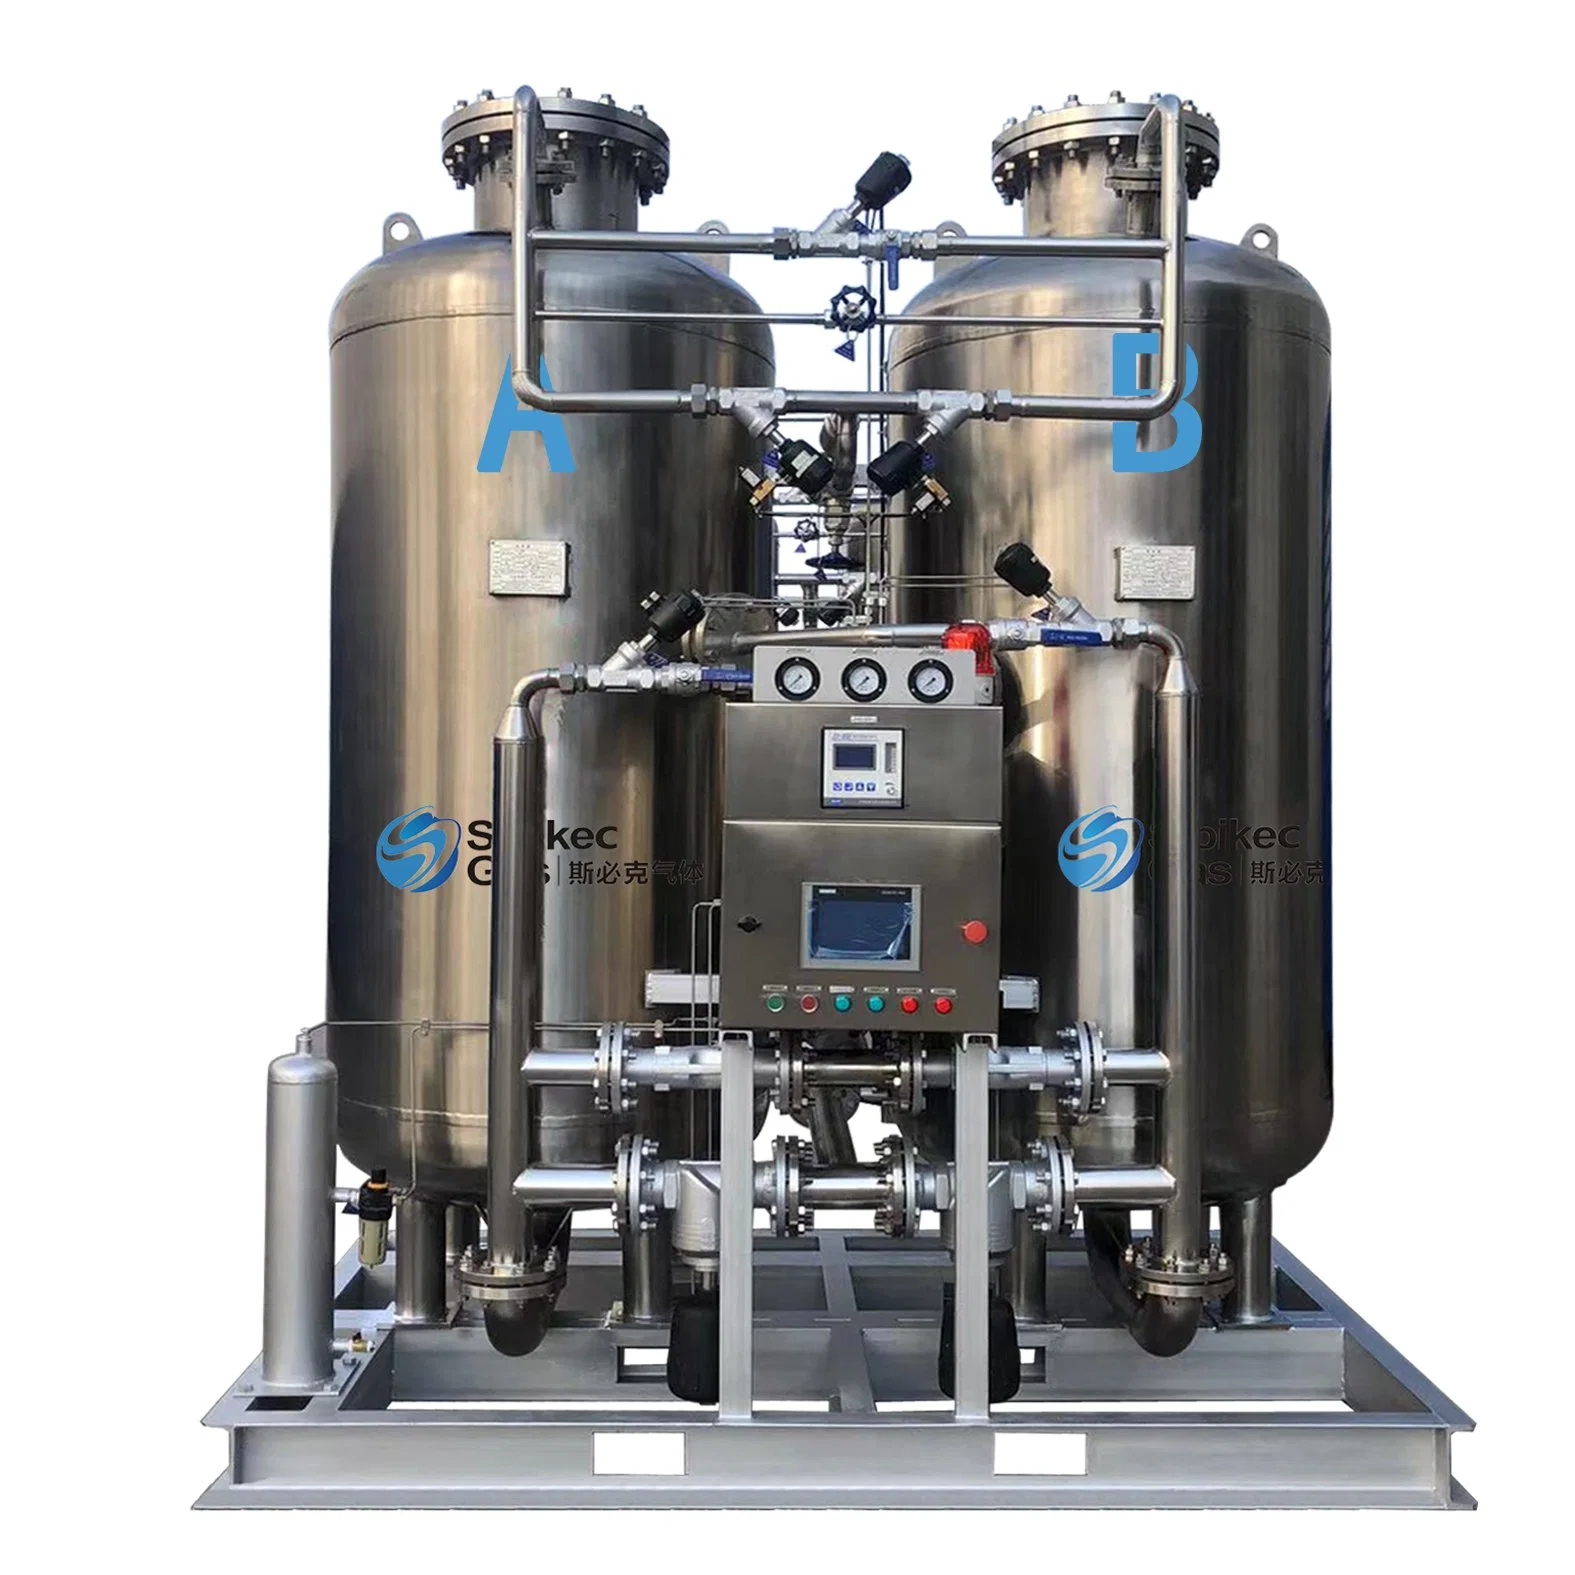 Psa Nitrogen Gas Generator Manufacture for Industrial Application